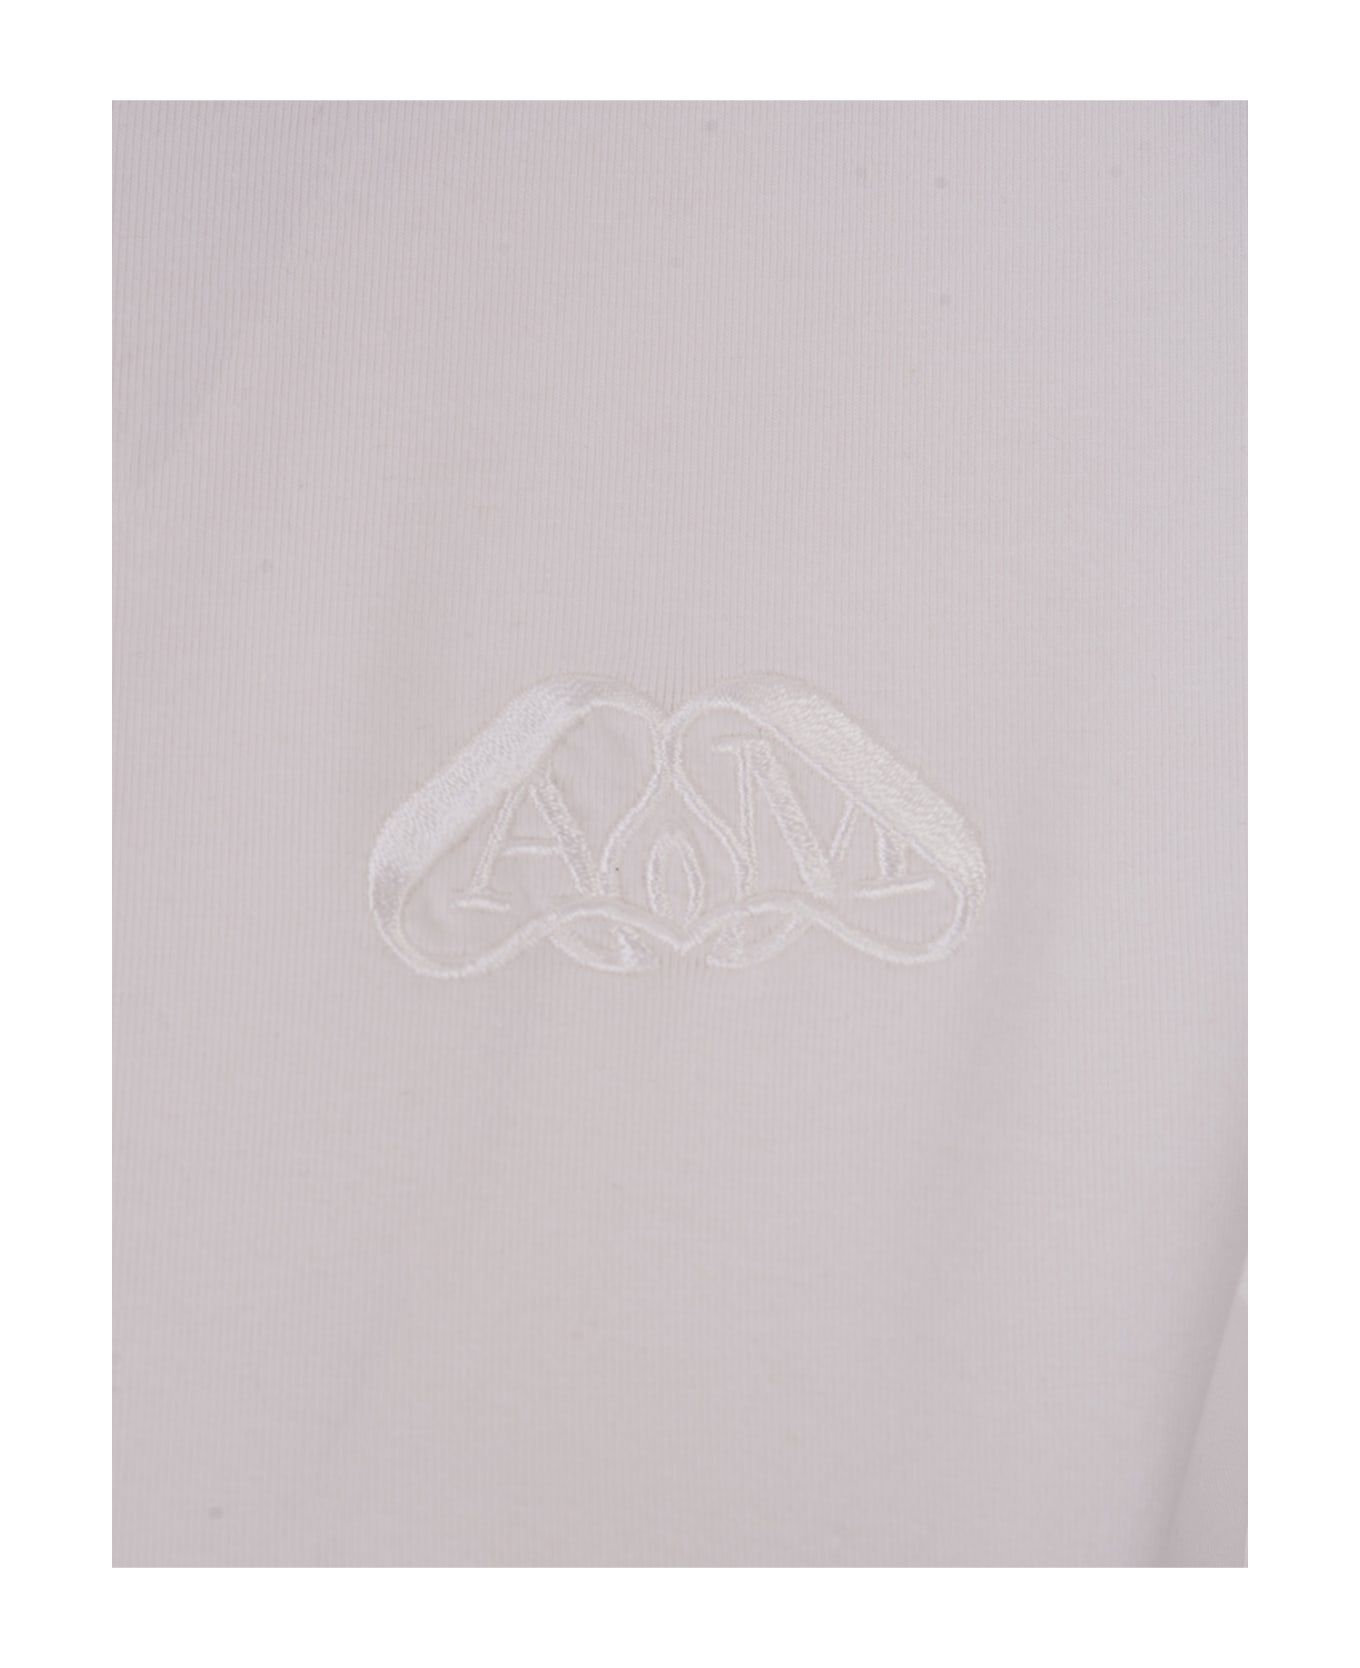 Alexander McQueen Seal Logo Slim T-shirt - Bianco Tシャツ